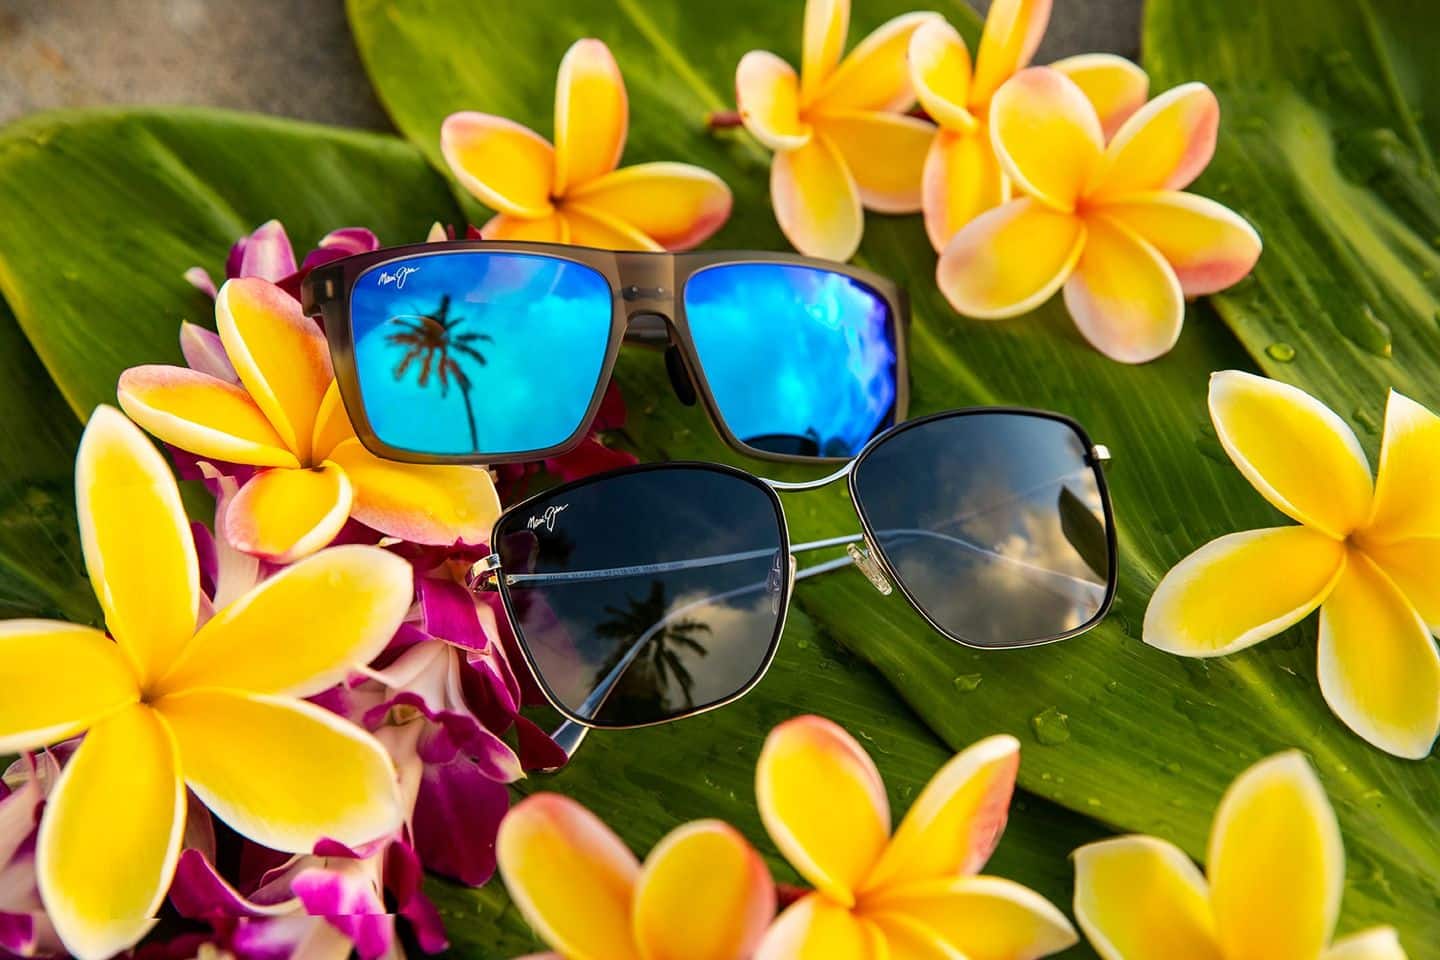 Kering Eyewear to Acquire Maui Jim